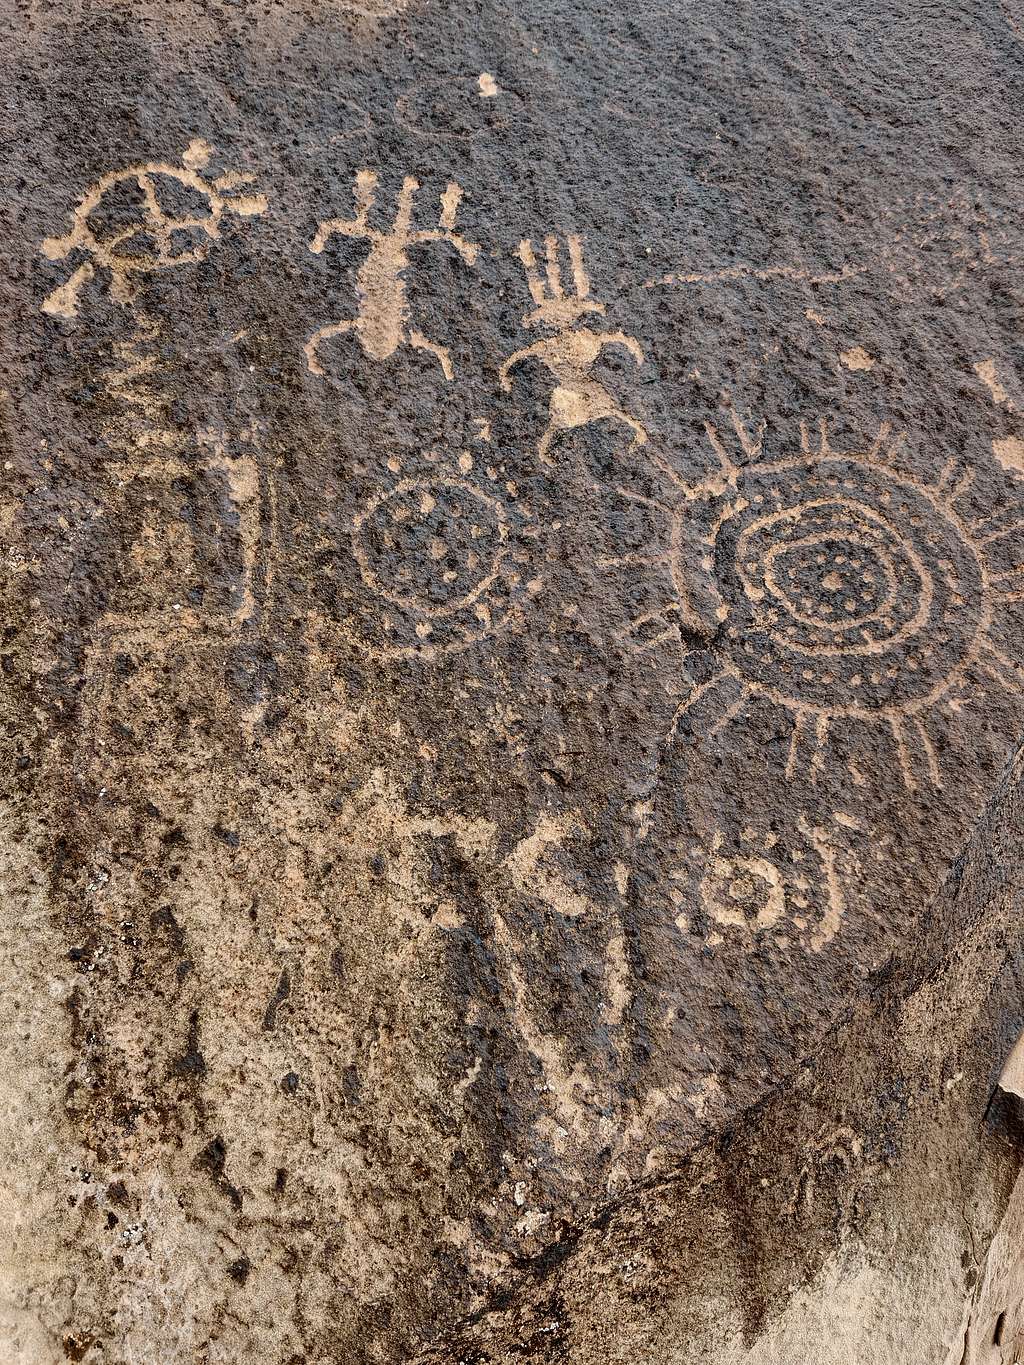 Petroglyphs at Little Black Mountain